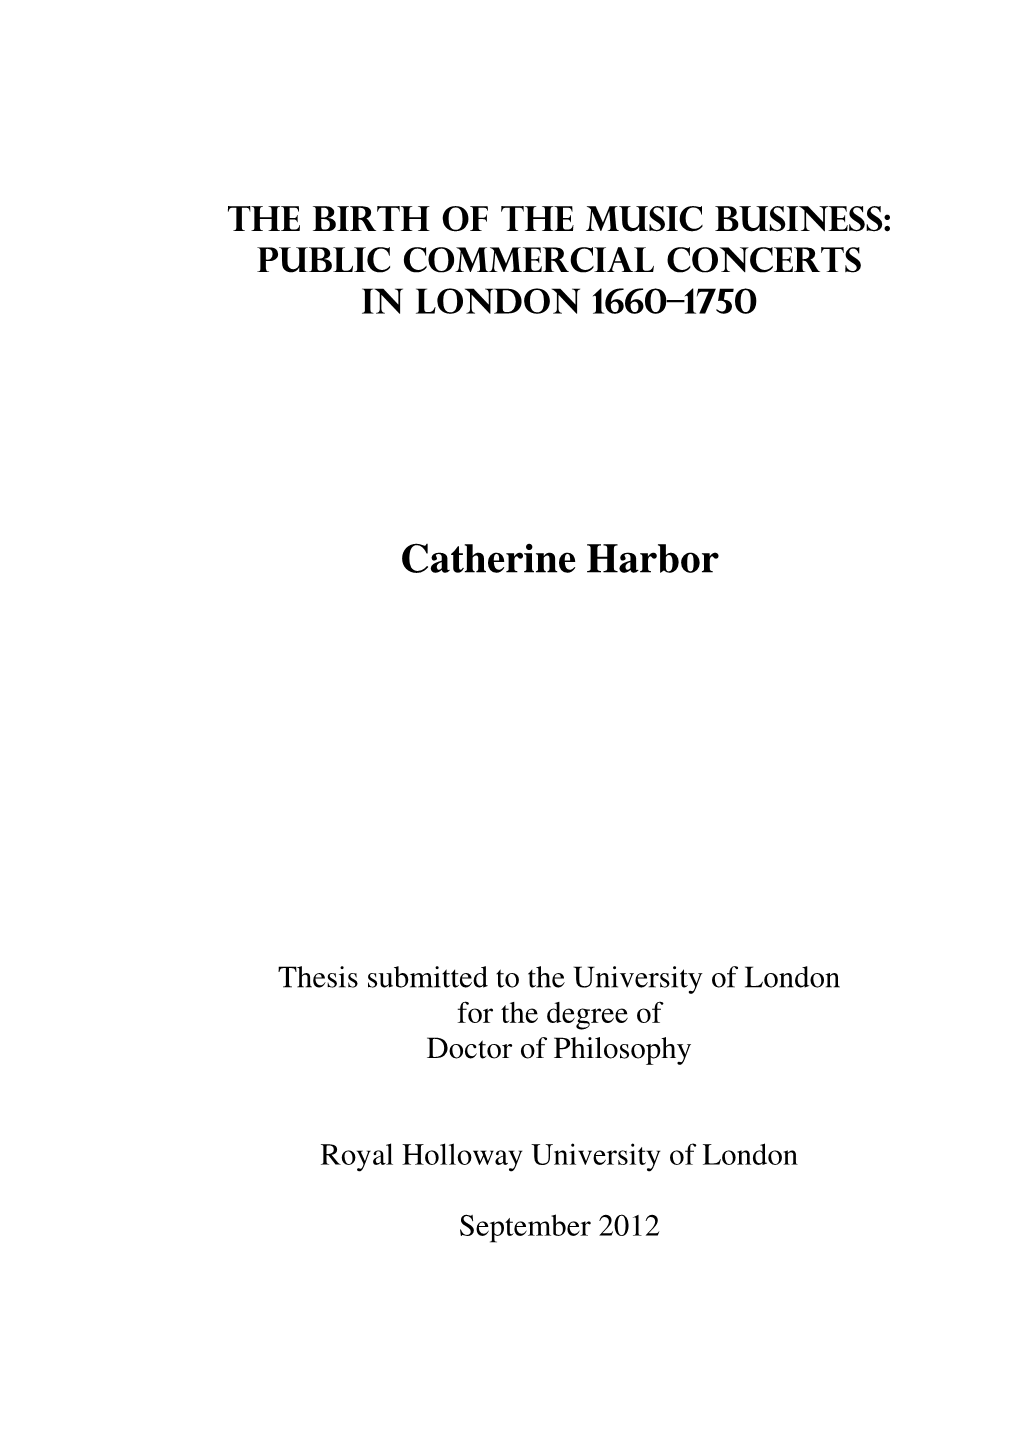 Catherine Harbor Phd Dissertation Volume 1